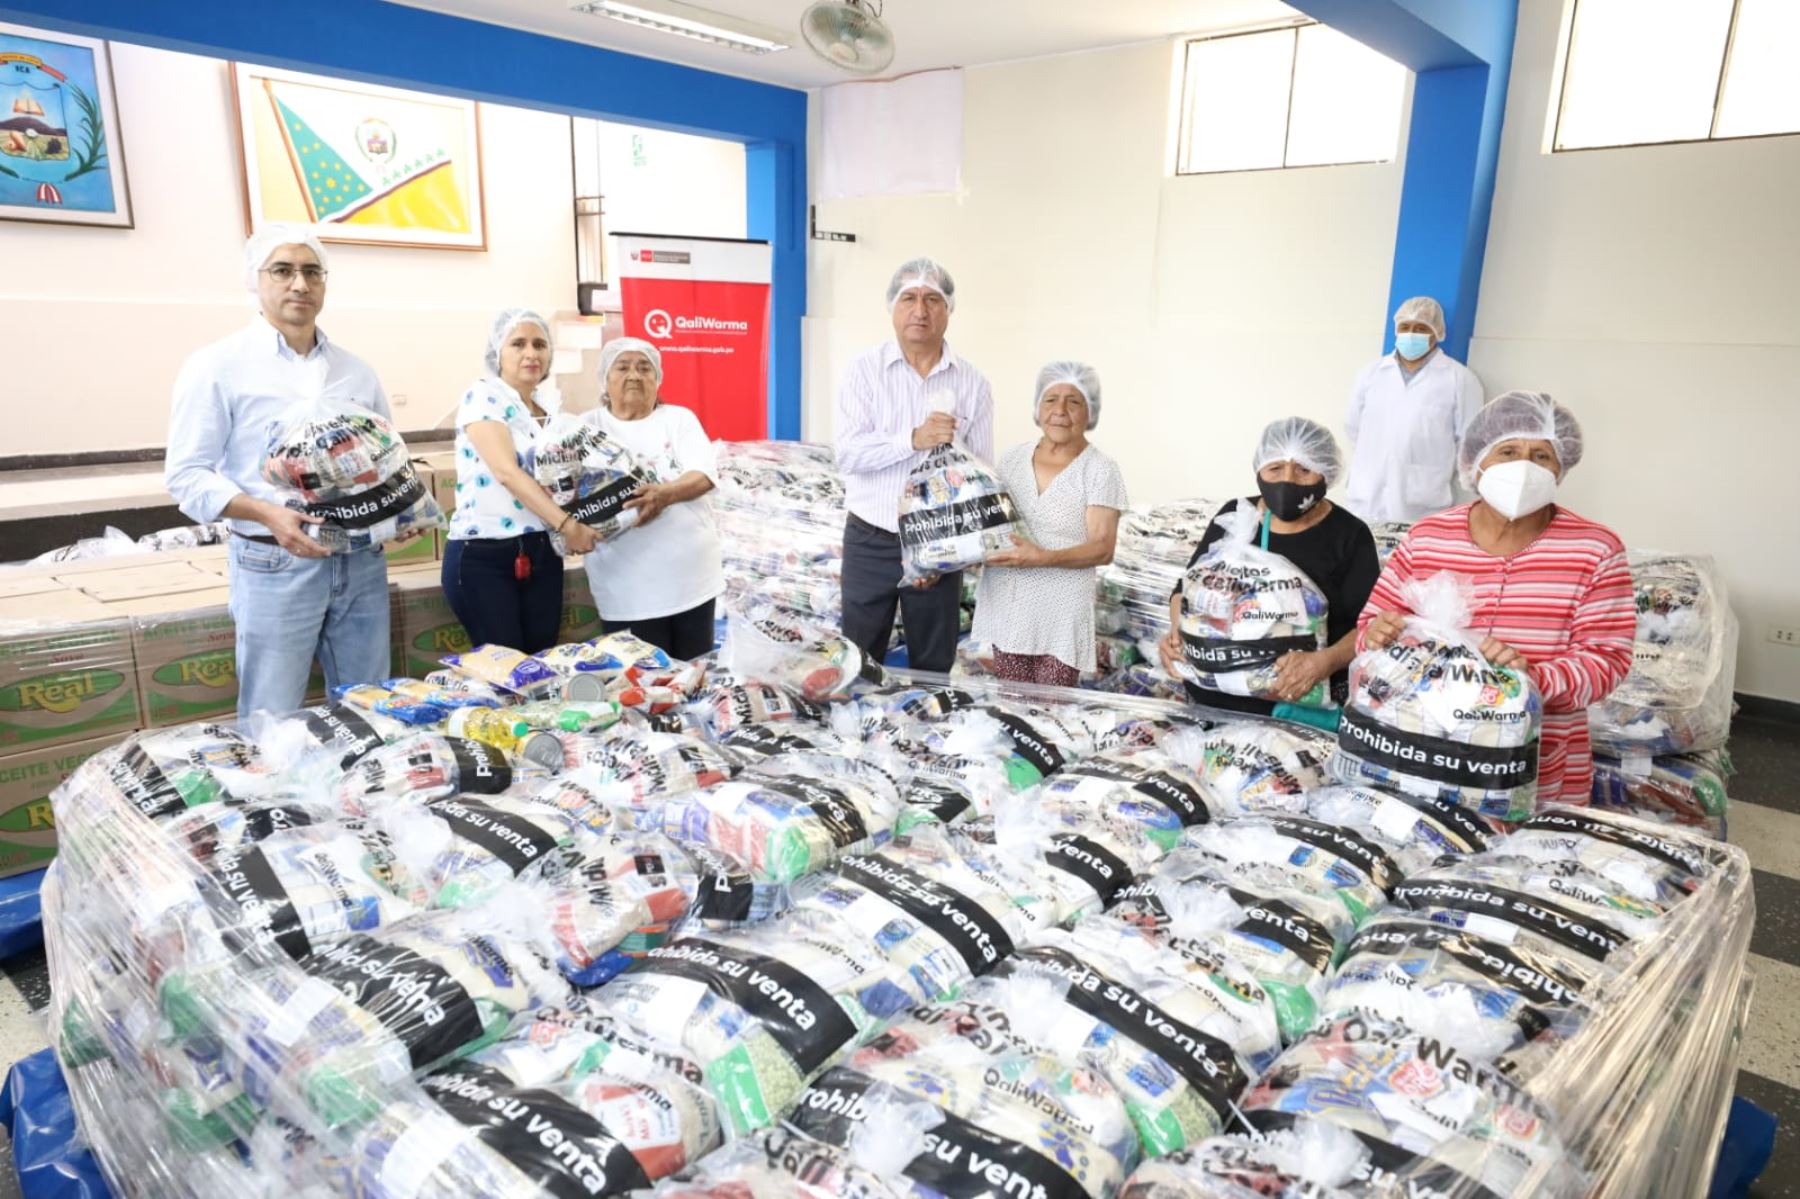 Programa Qali Warma entregó más de 23 toneladas de alimentos a cinco municipalidades de Ica para atender a la población vulnerable de dichos distritos. ANDINA/Difusión